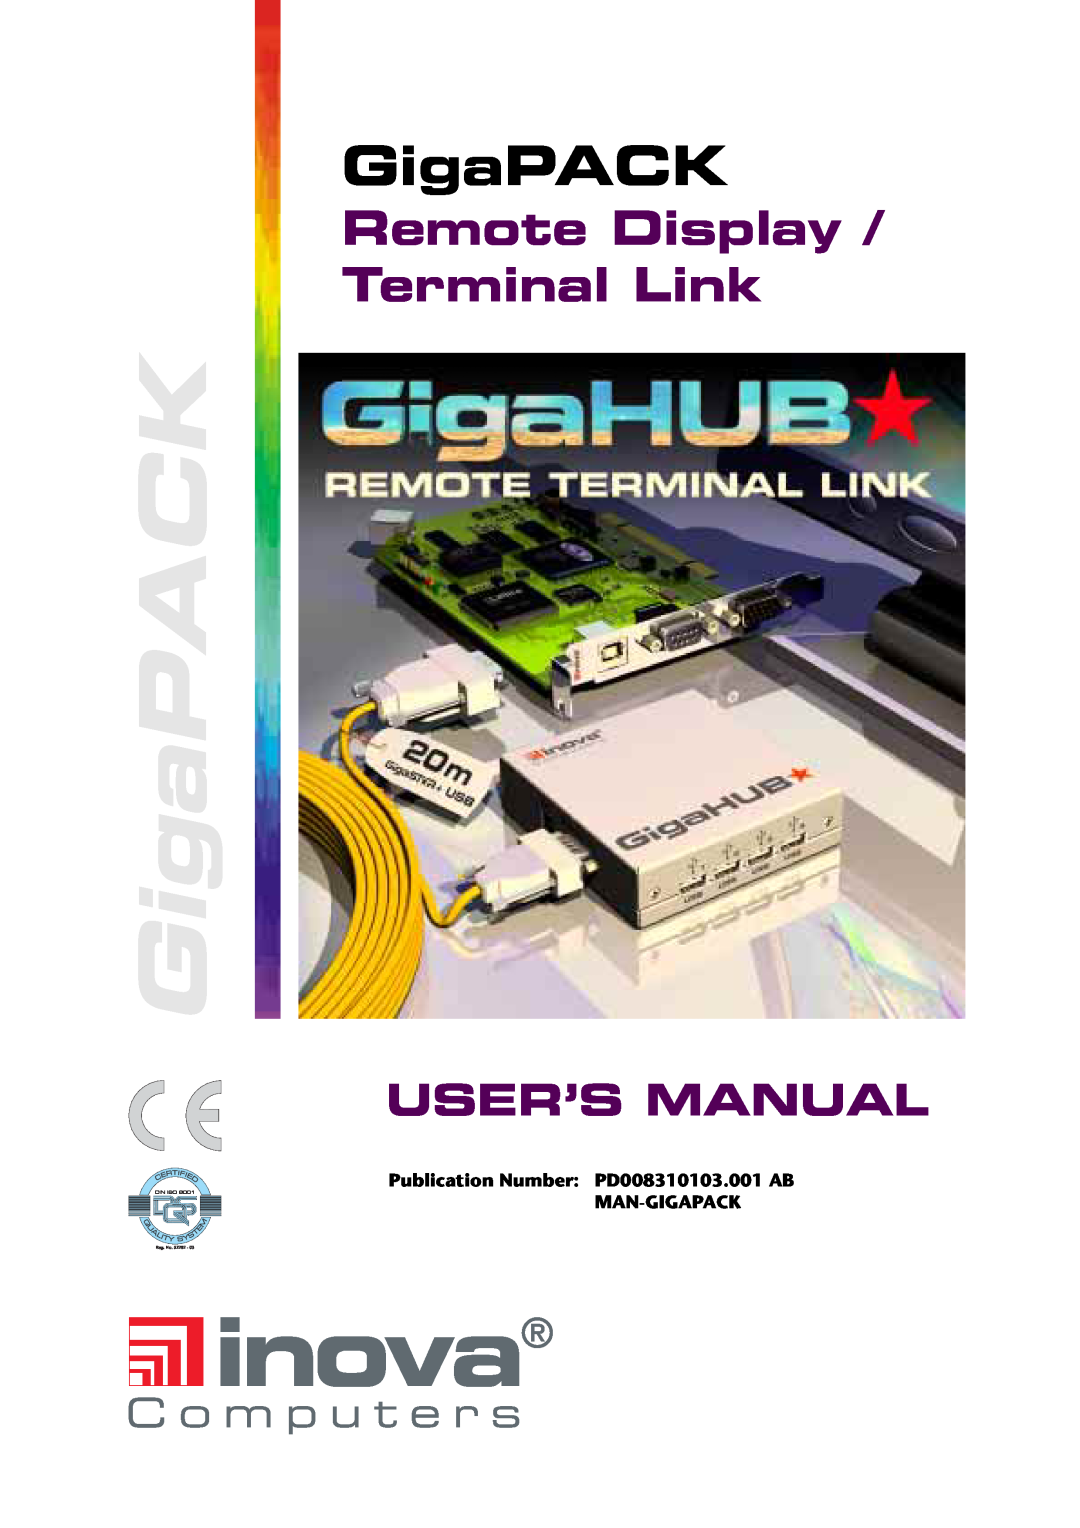 Inova PD008310103.001 AB user manual GigaPACK, Remote Display Terminal Link, User’S Manual 